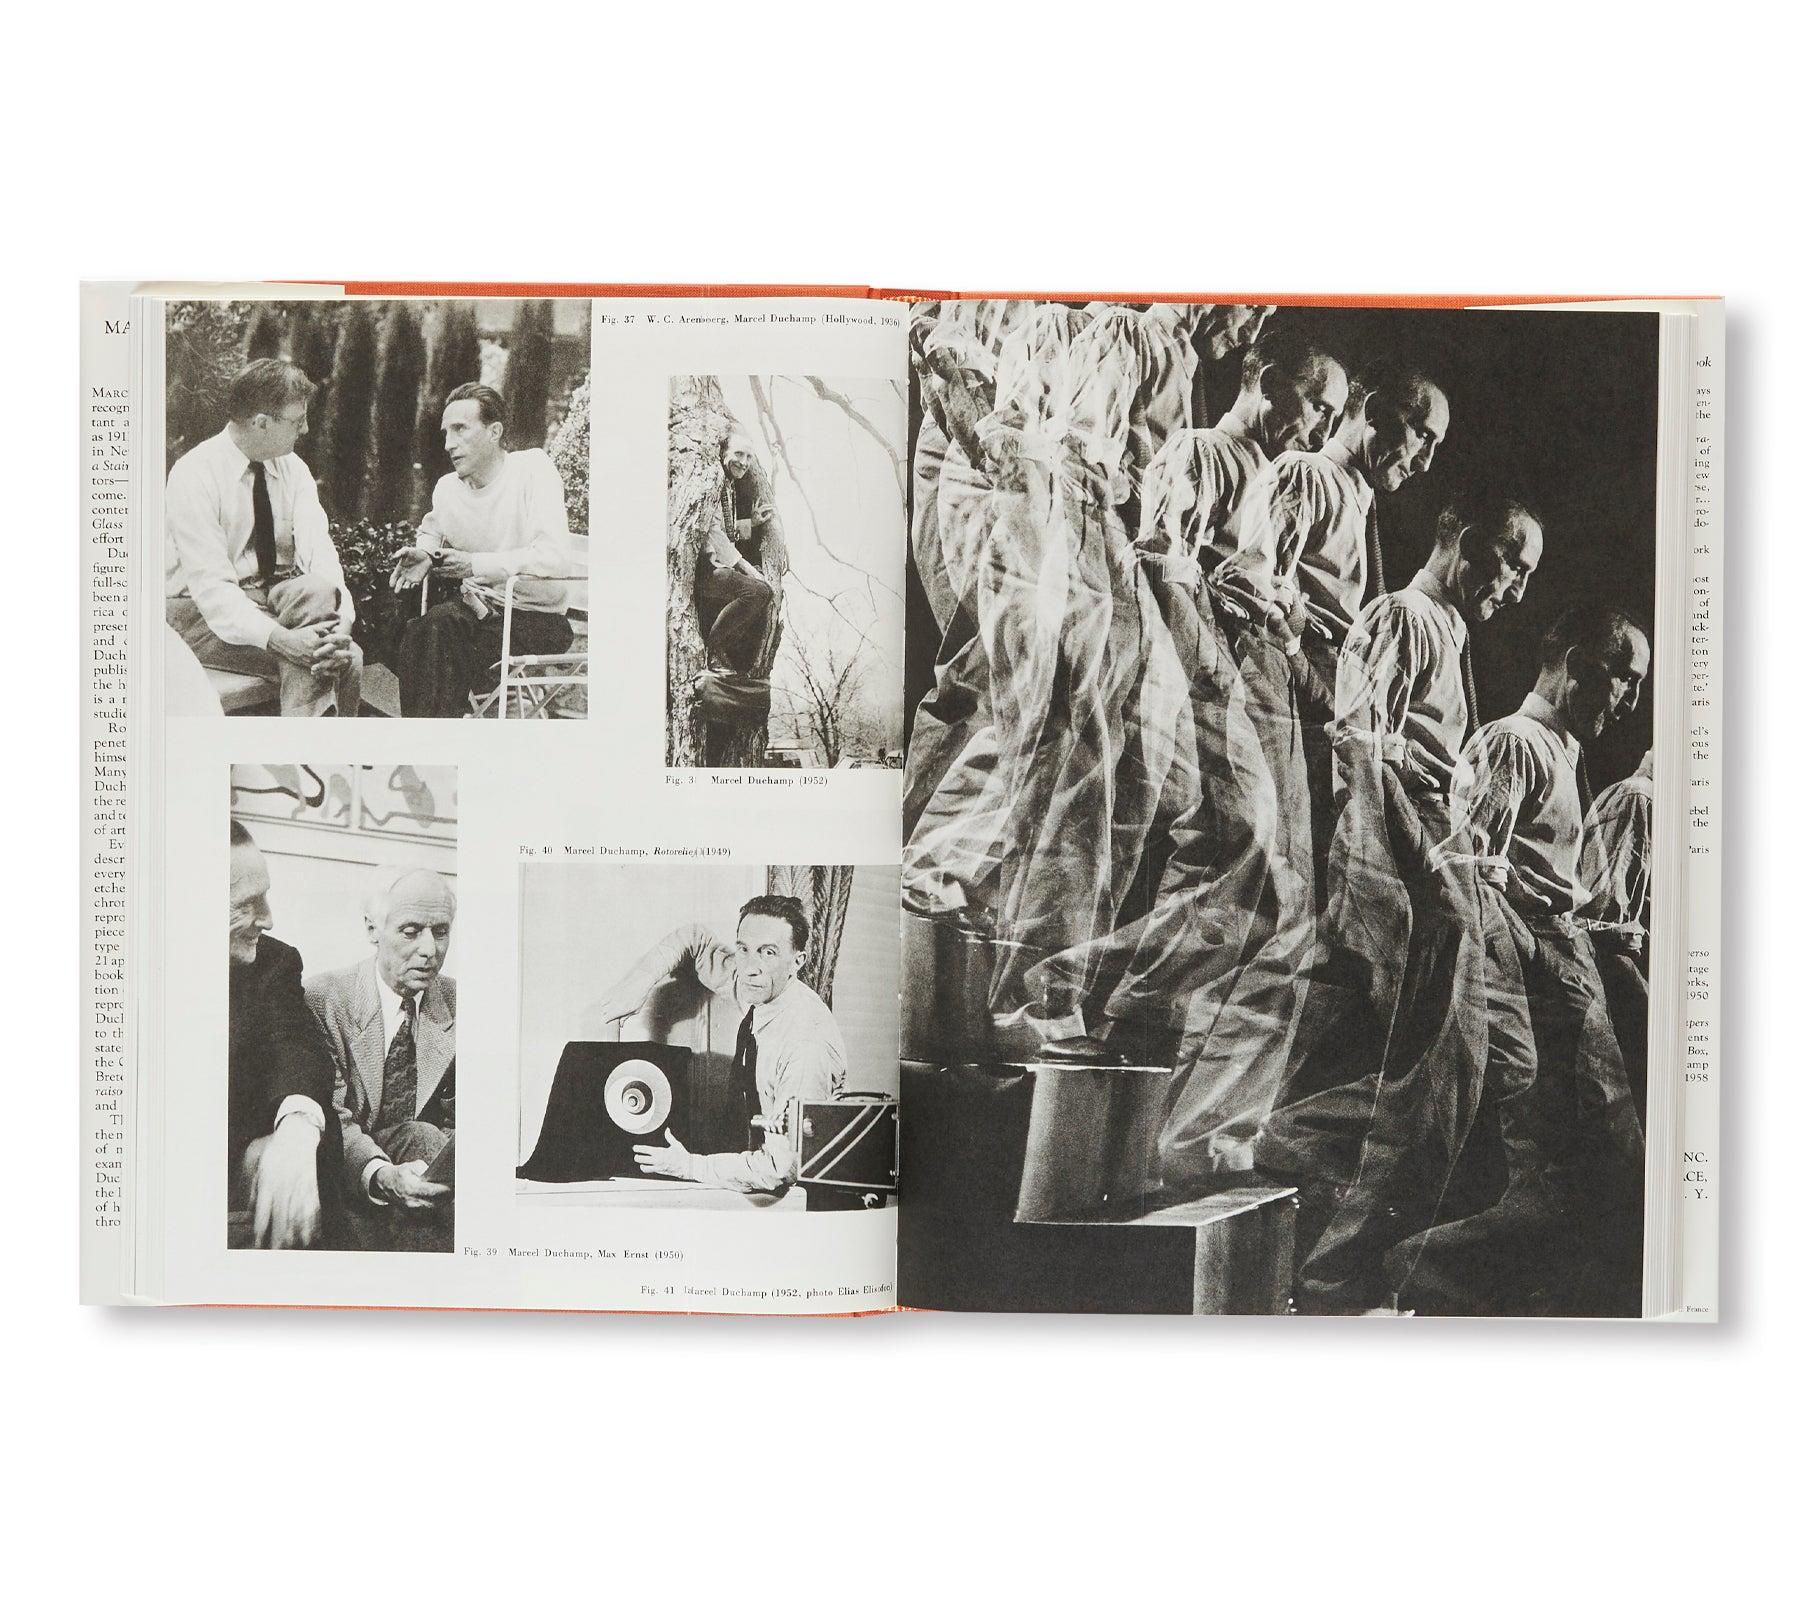 MARCEL DUCHAMP: FACSIMILE OF THE 1959 by Marcel Duchamp, Robert